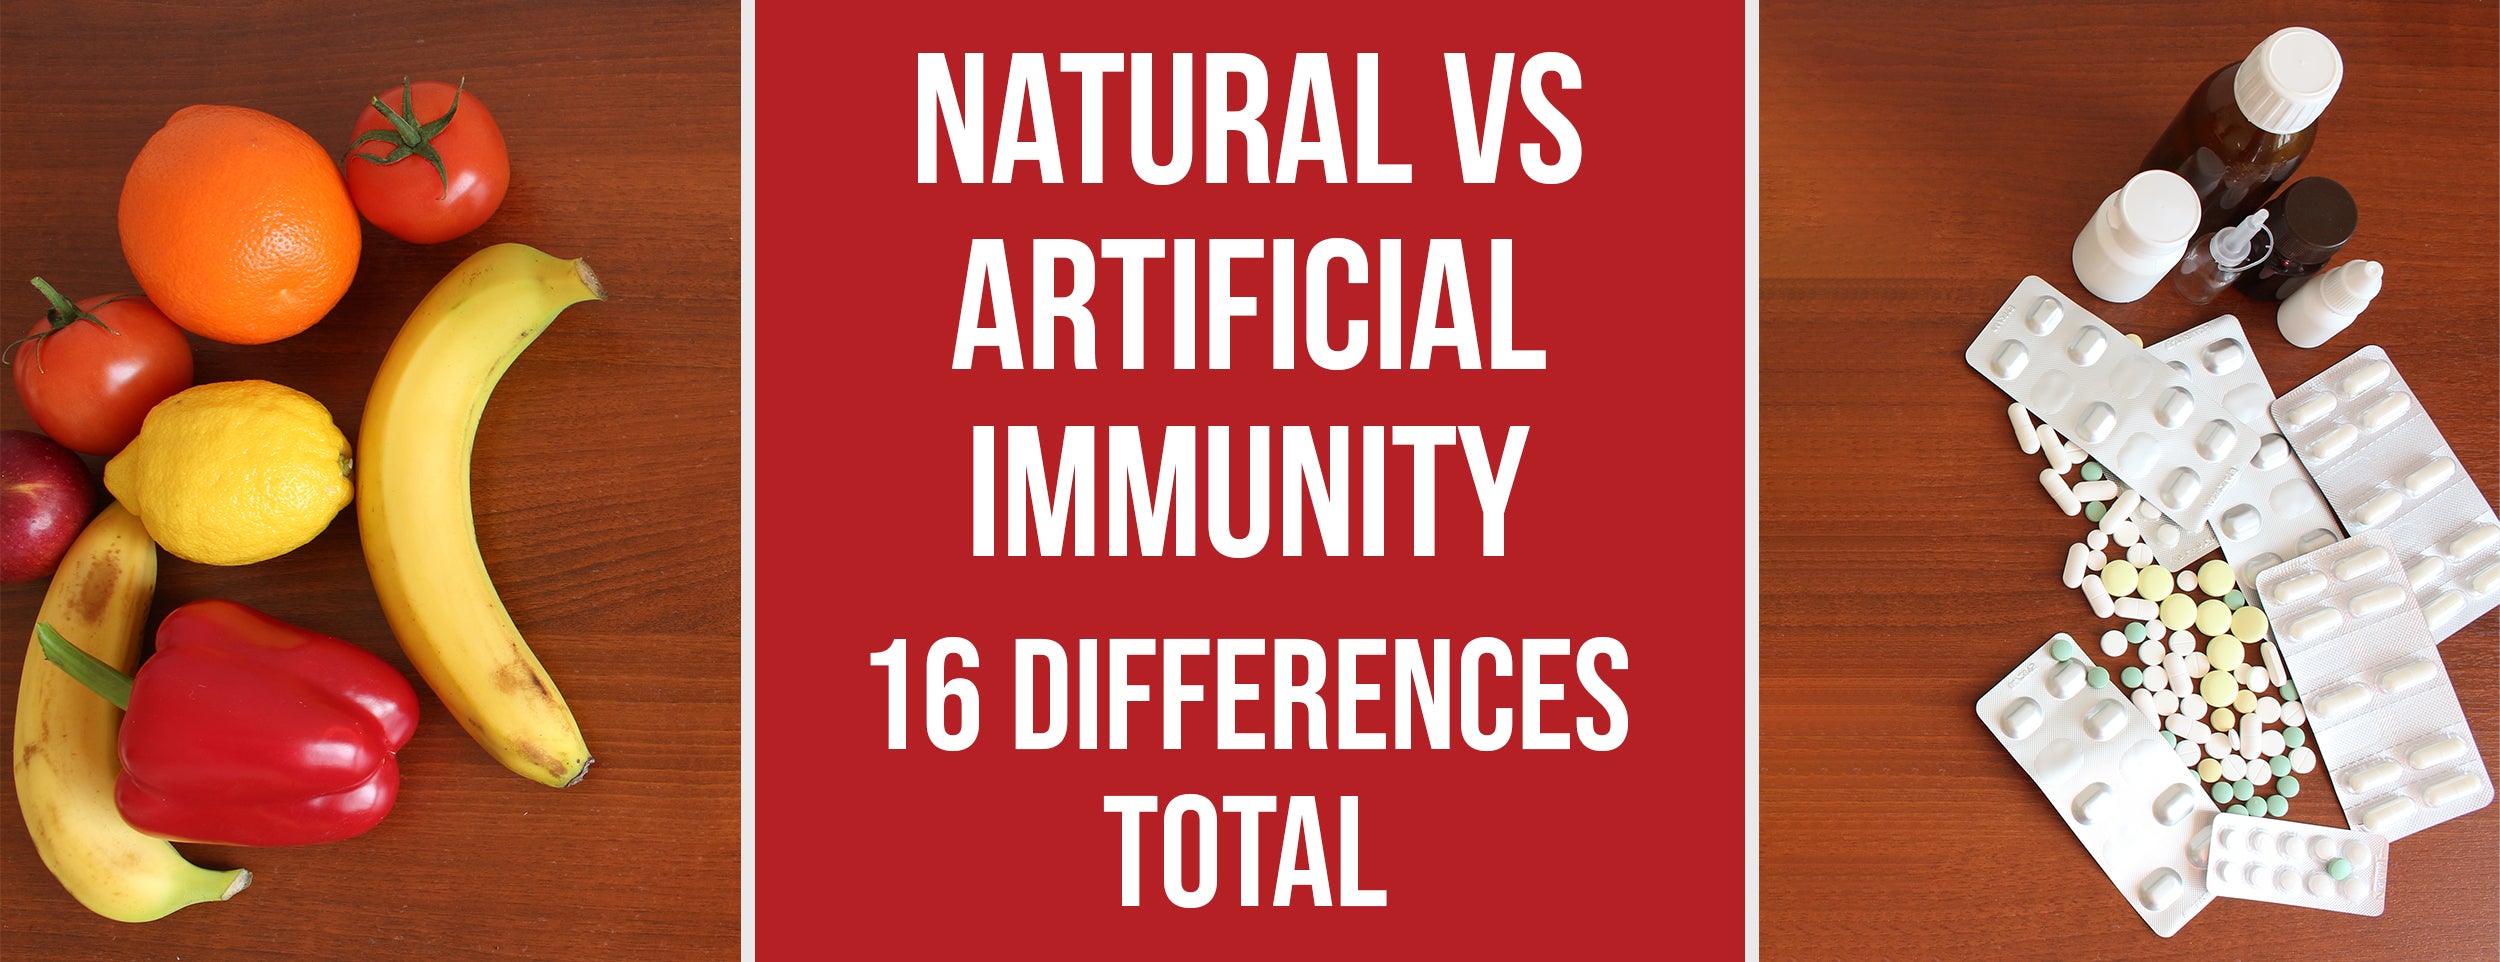 Artificial Immunity vs Natural Immunity